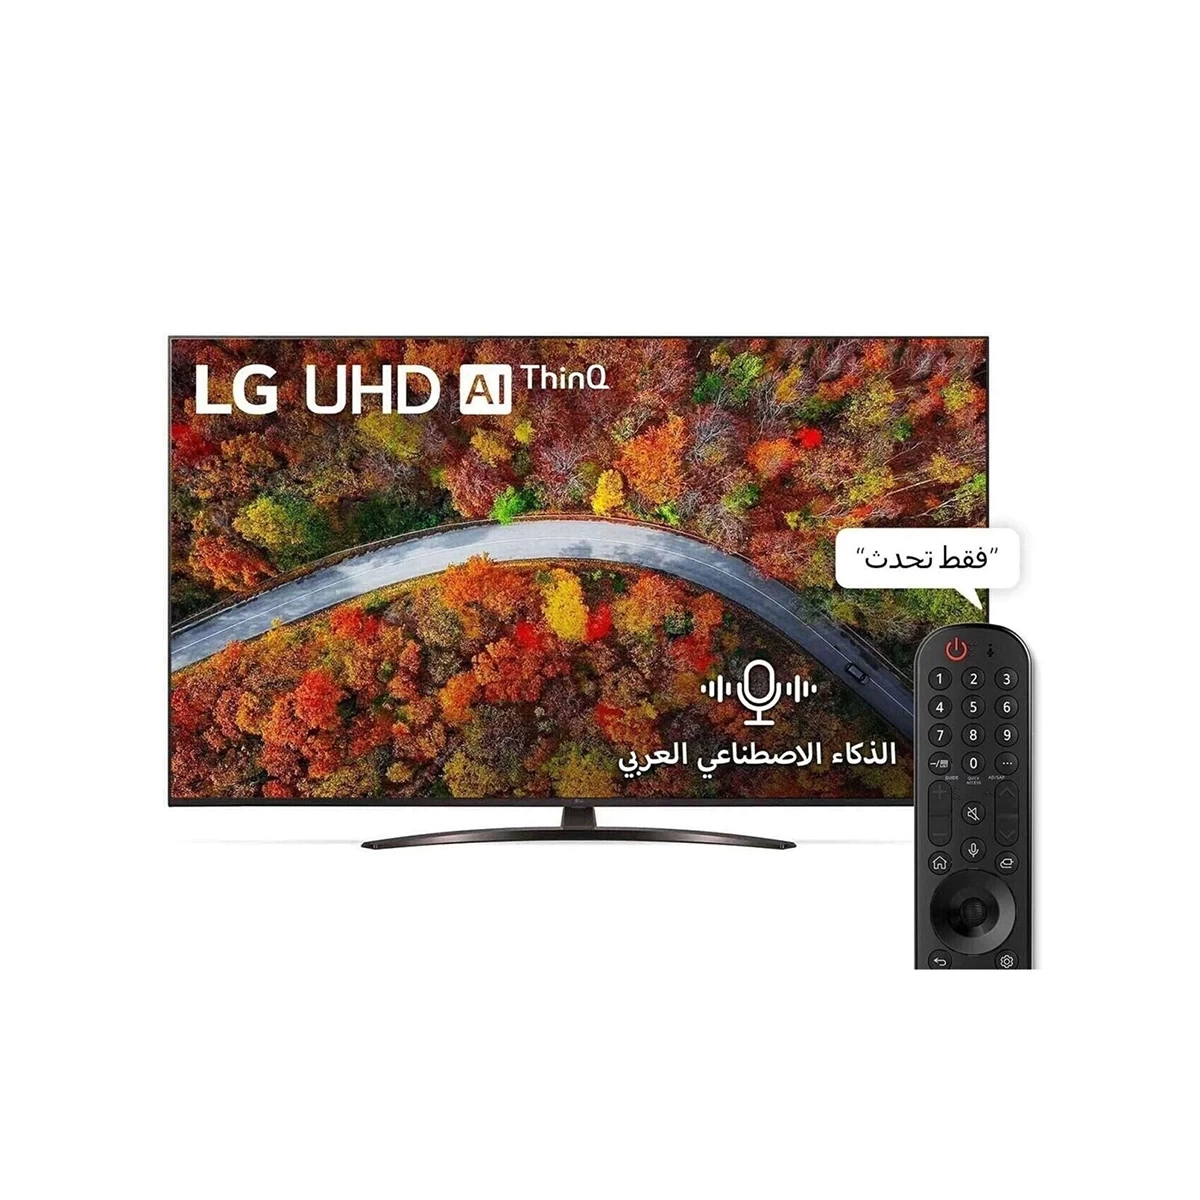 LG UHD 4K TV 50 Inch UP81 Series, Cinema Screen Design 4K Active HDR WebOS Smart AI ThinQ